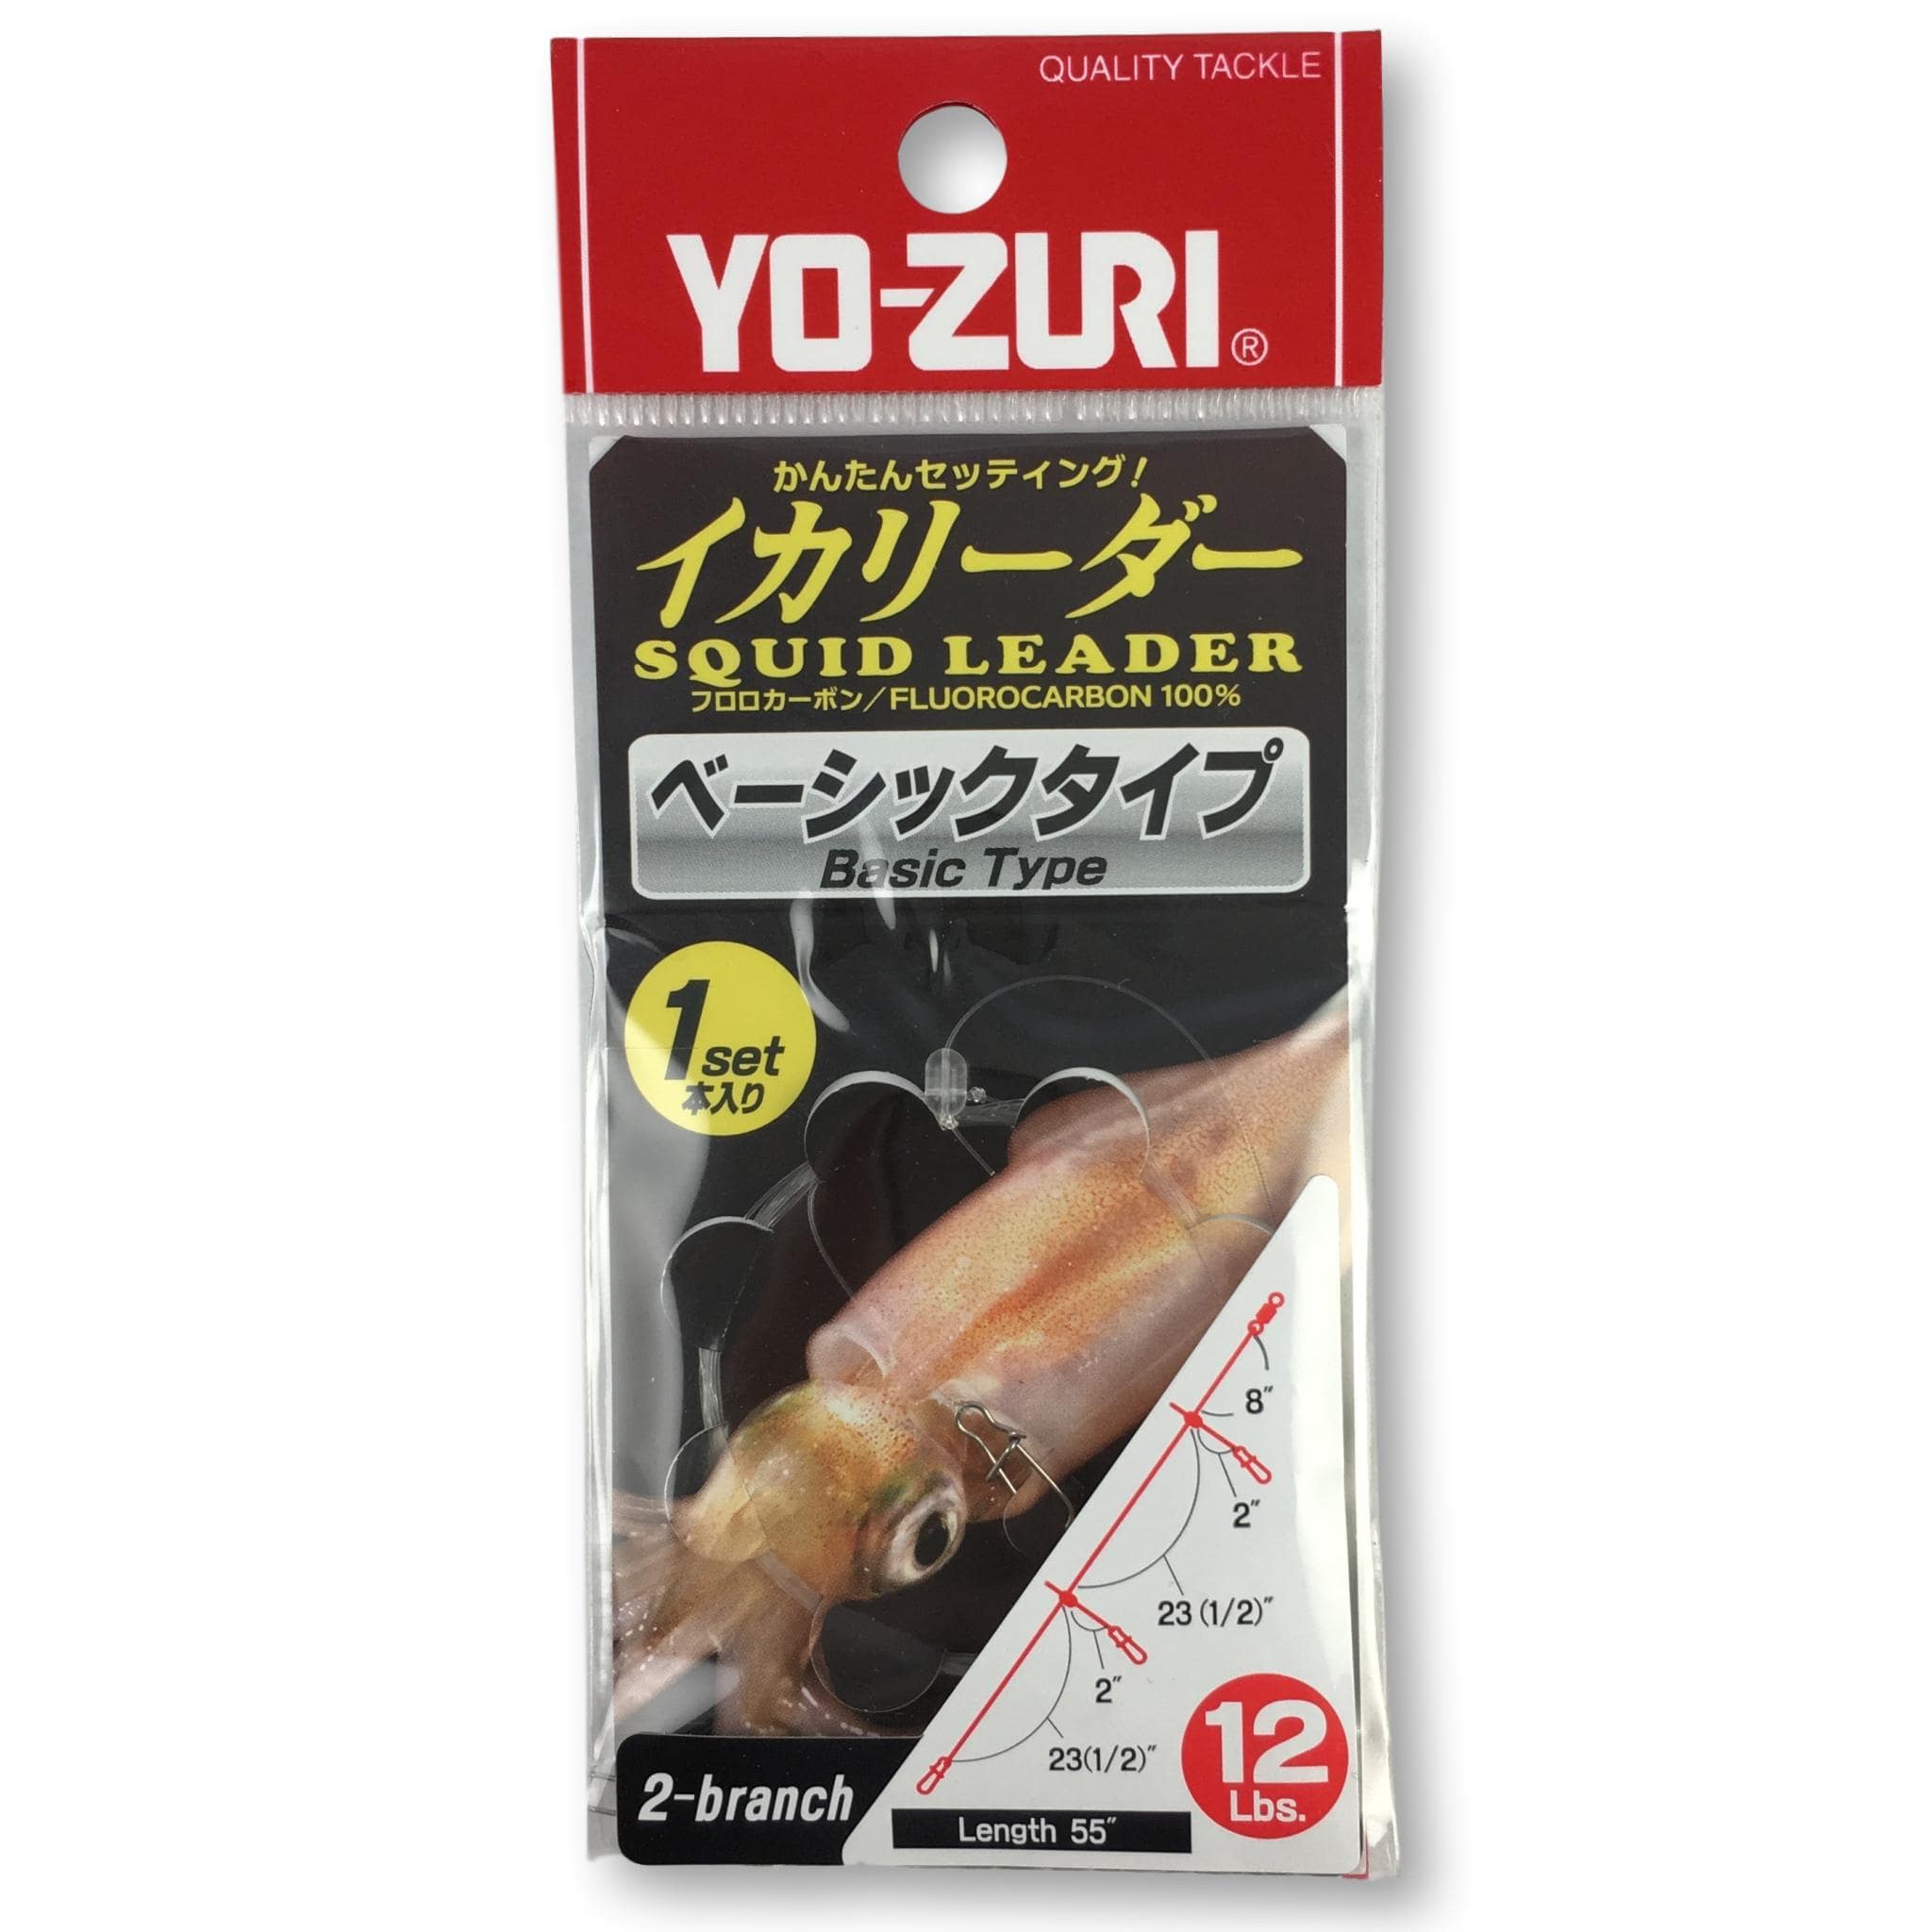 Yo-Zuri Squid Leader - 2 Branch 12lbs